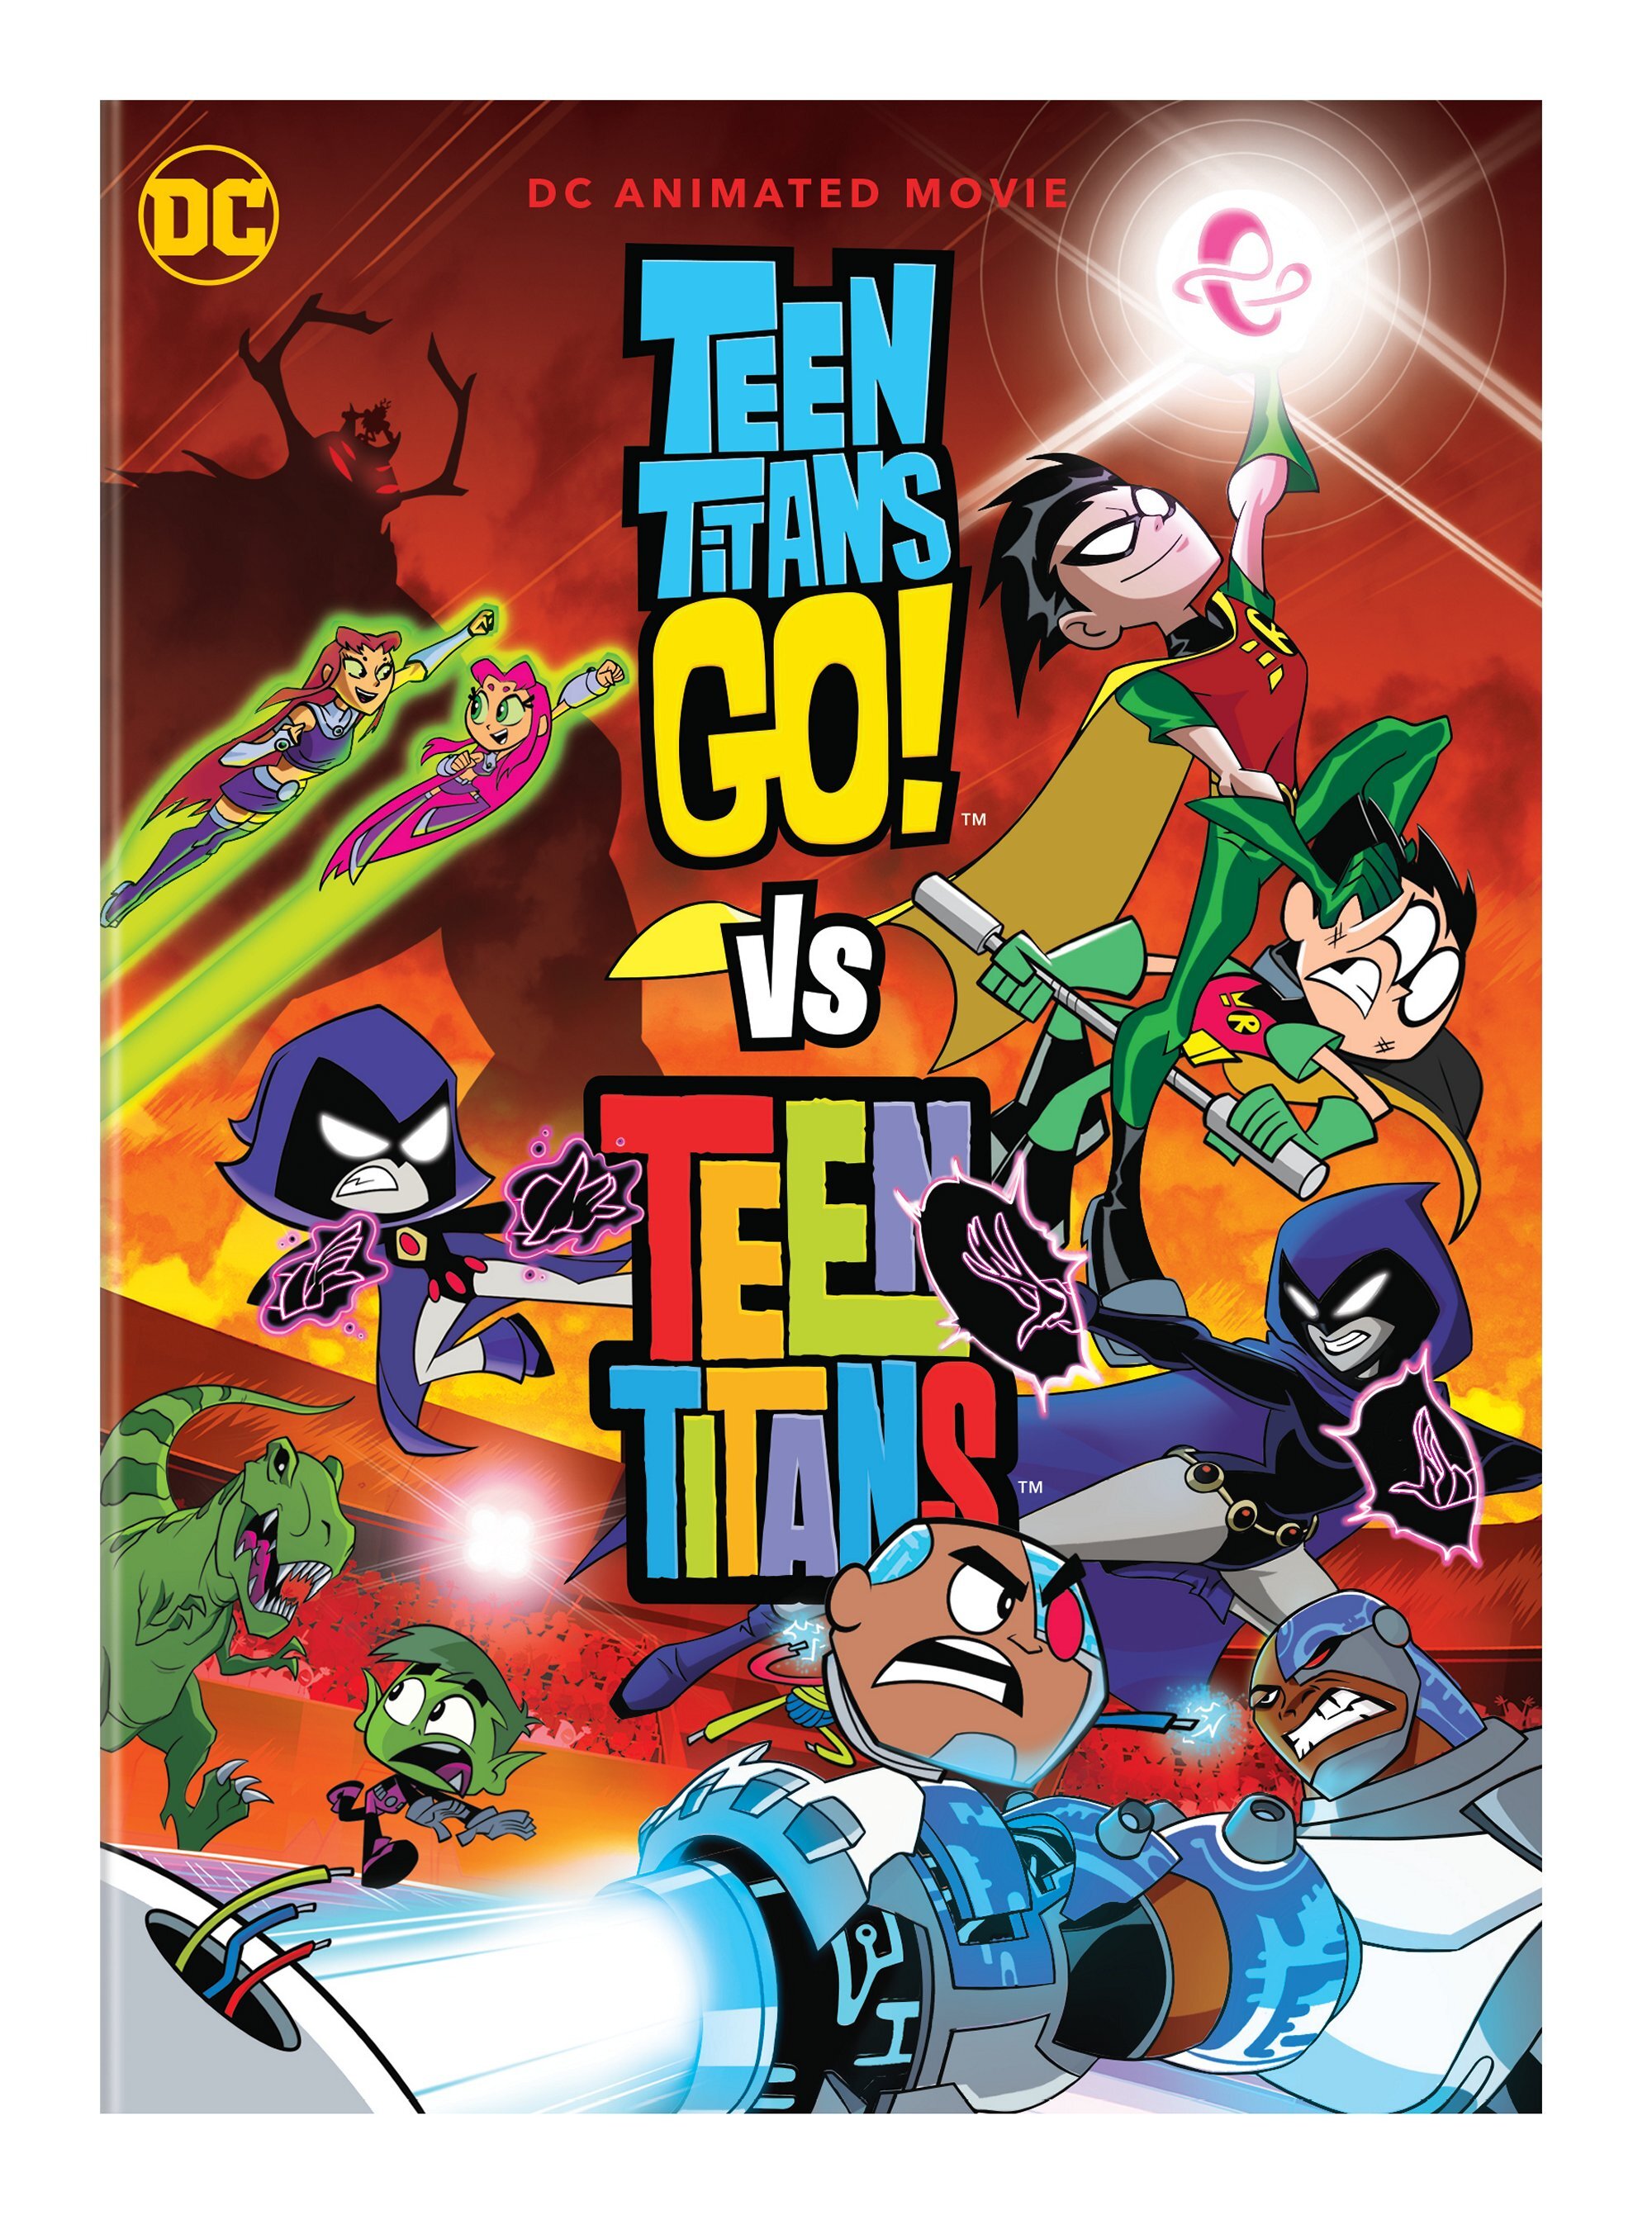 Teen Titans Go! Vs Teen Titans - DVD [ 2019 ]  - Animation Movies On DVD - Movies On GRUV